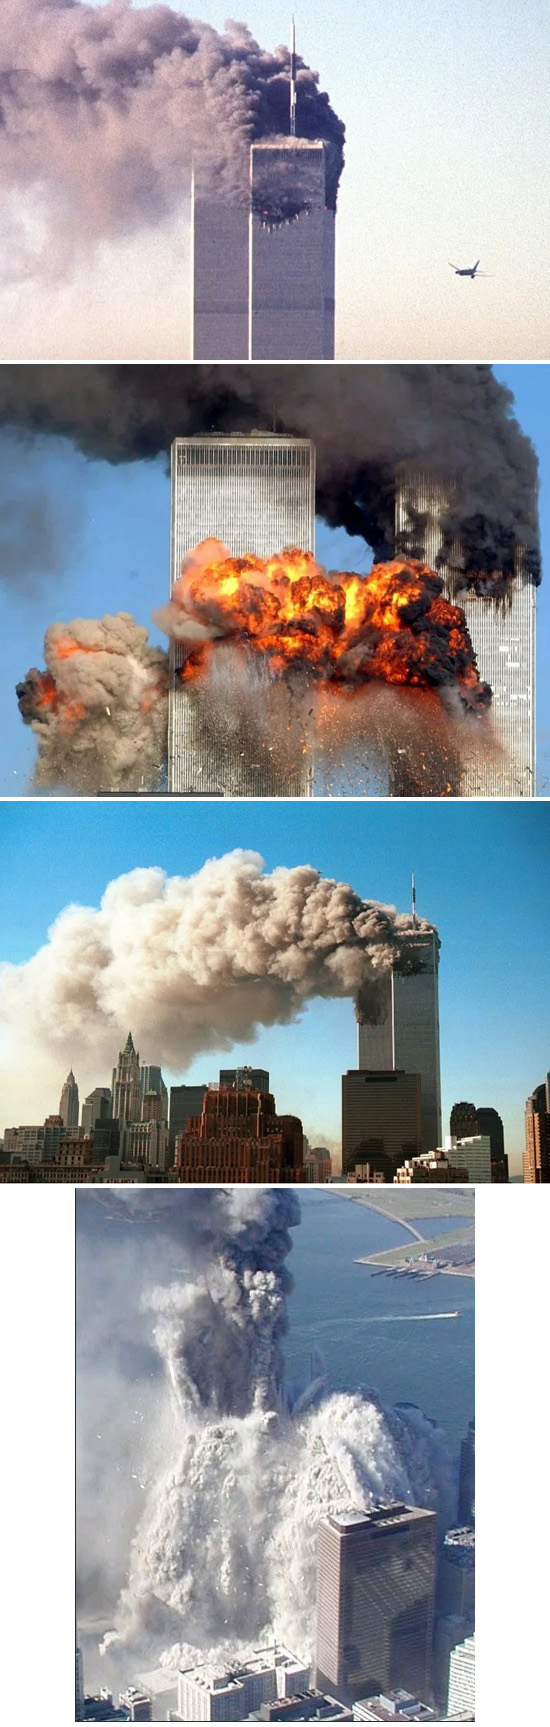 September 11, 2001 - photos 1